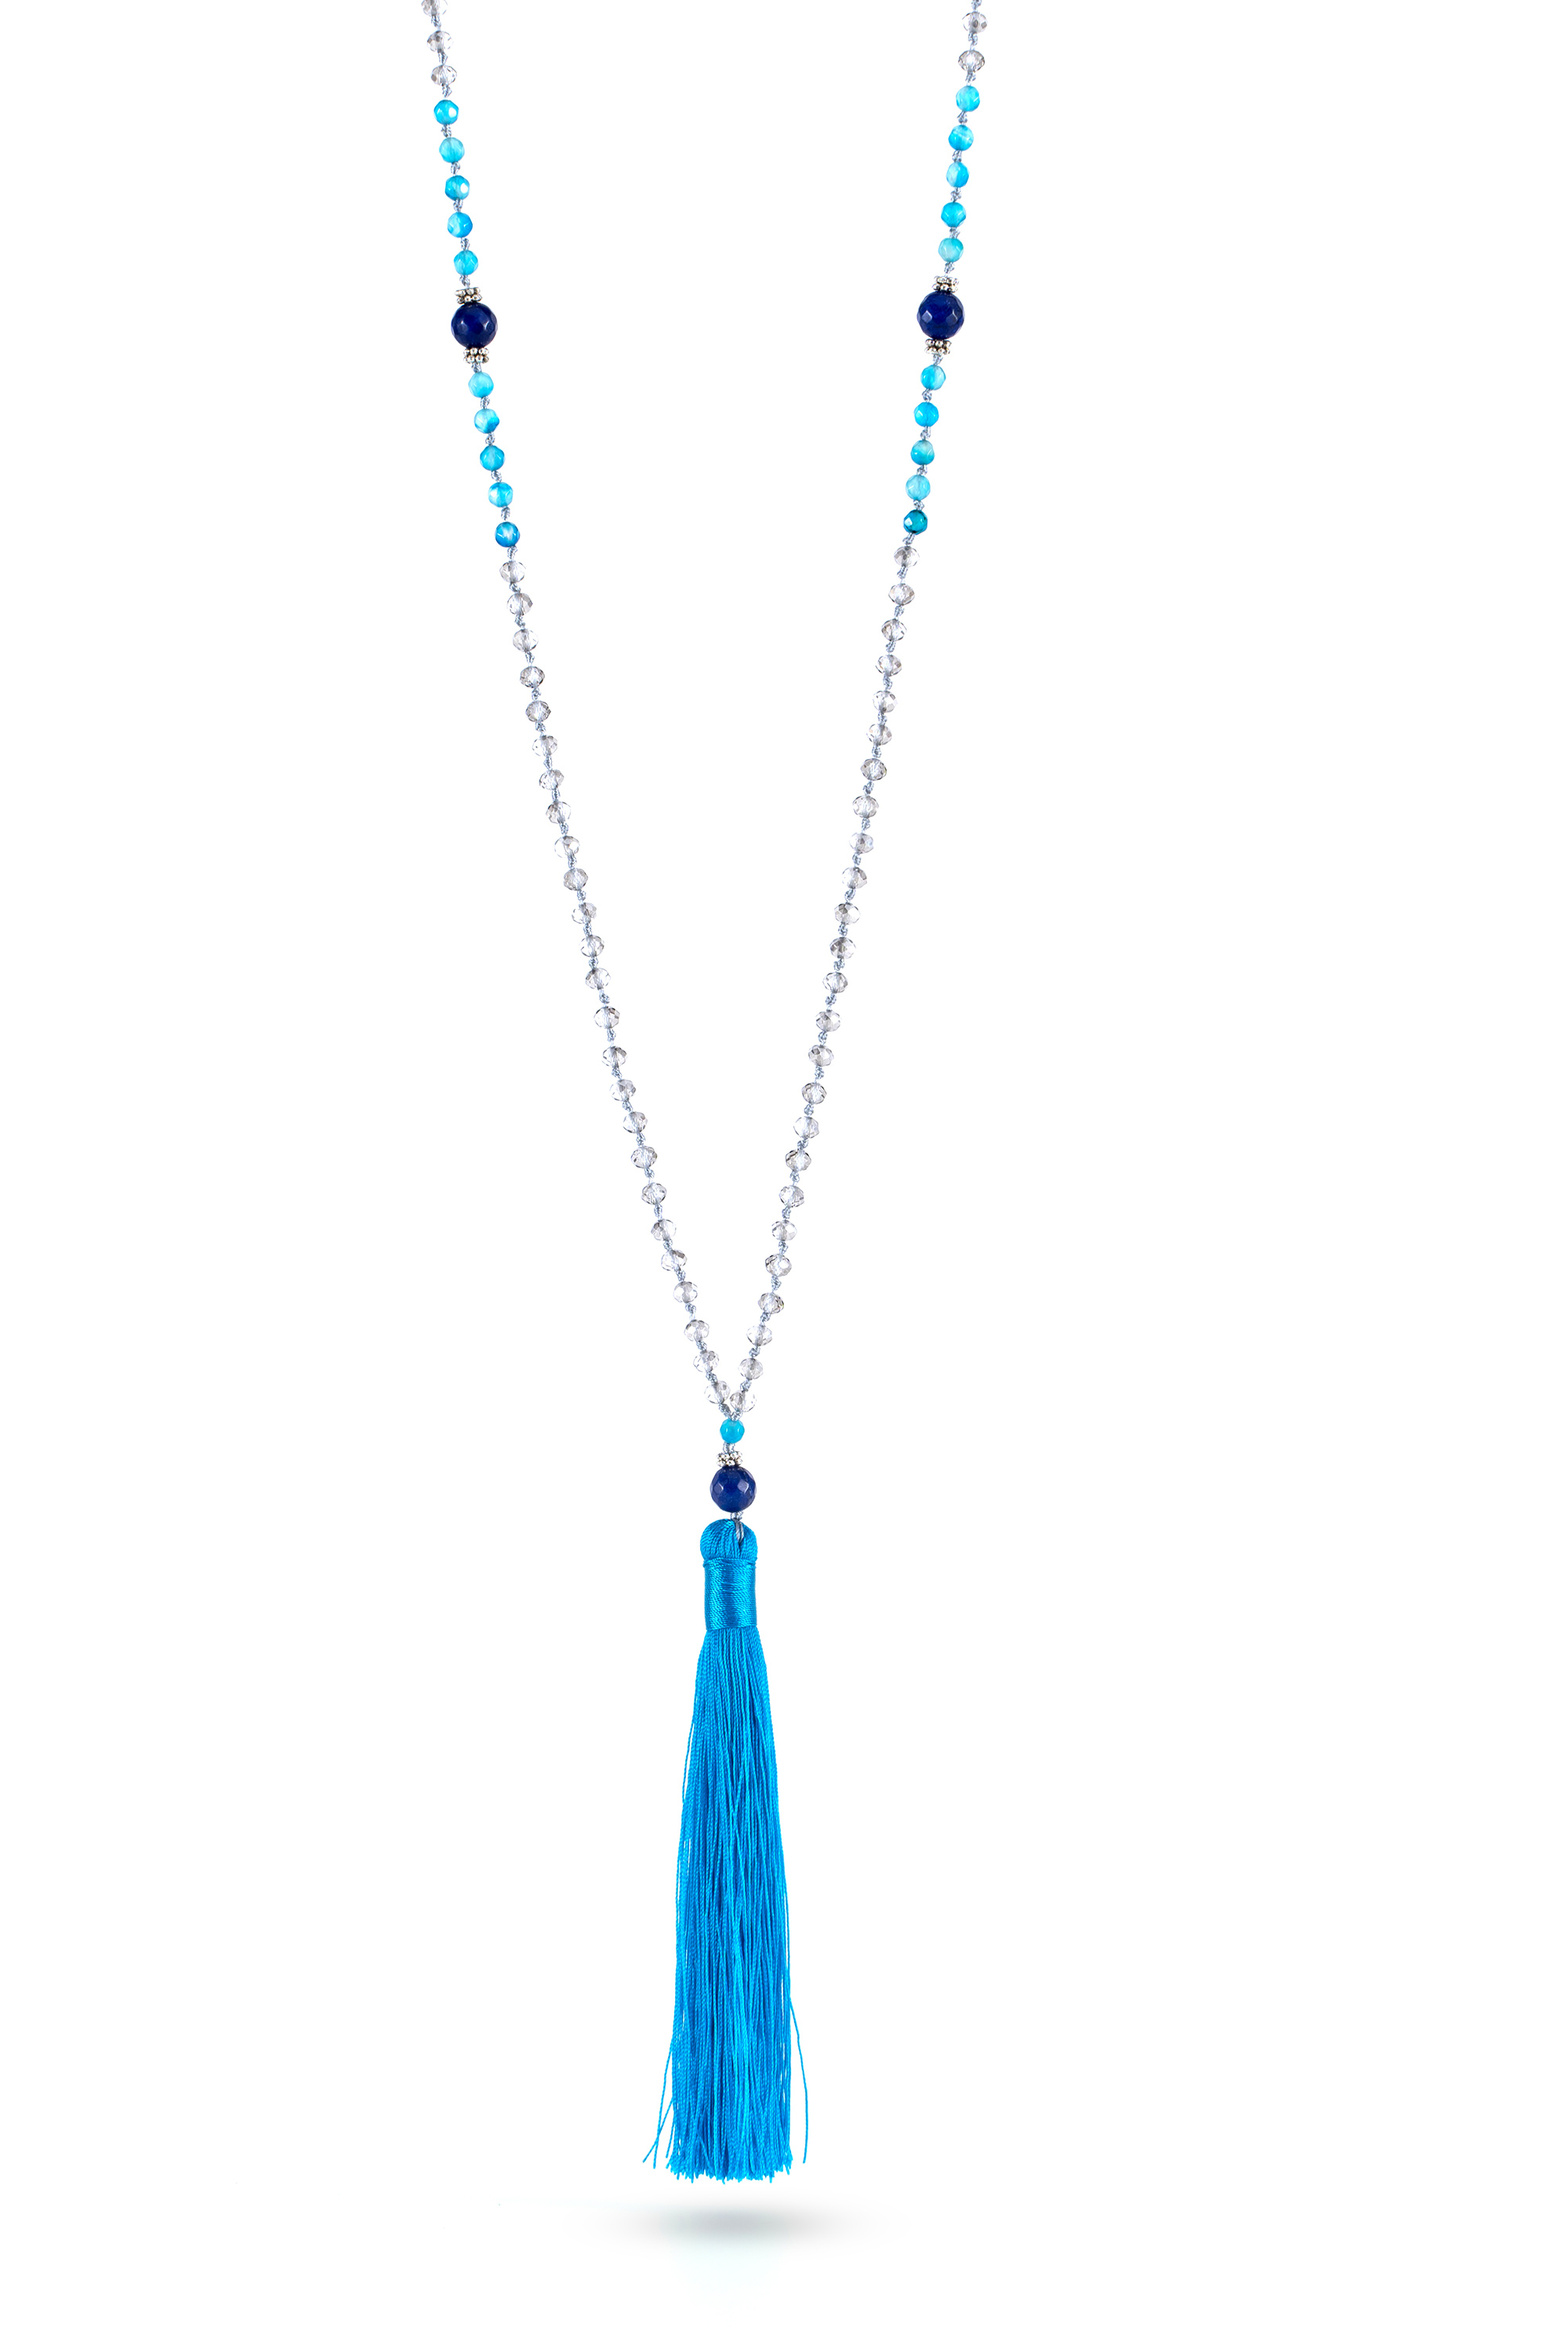 n2000_tassel_necklace_blue_new.jpg